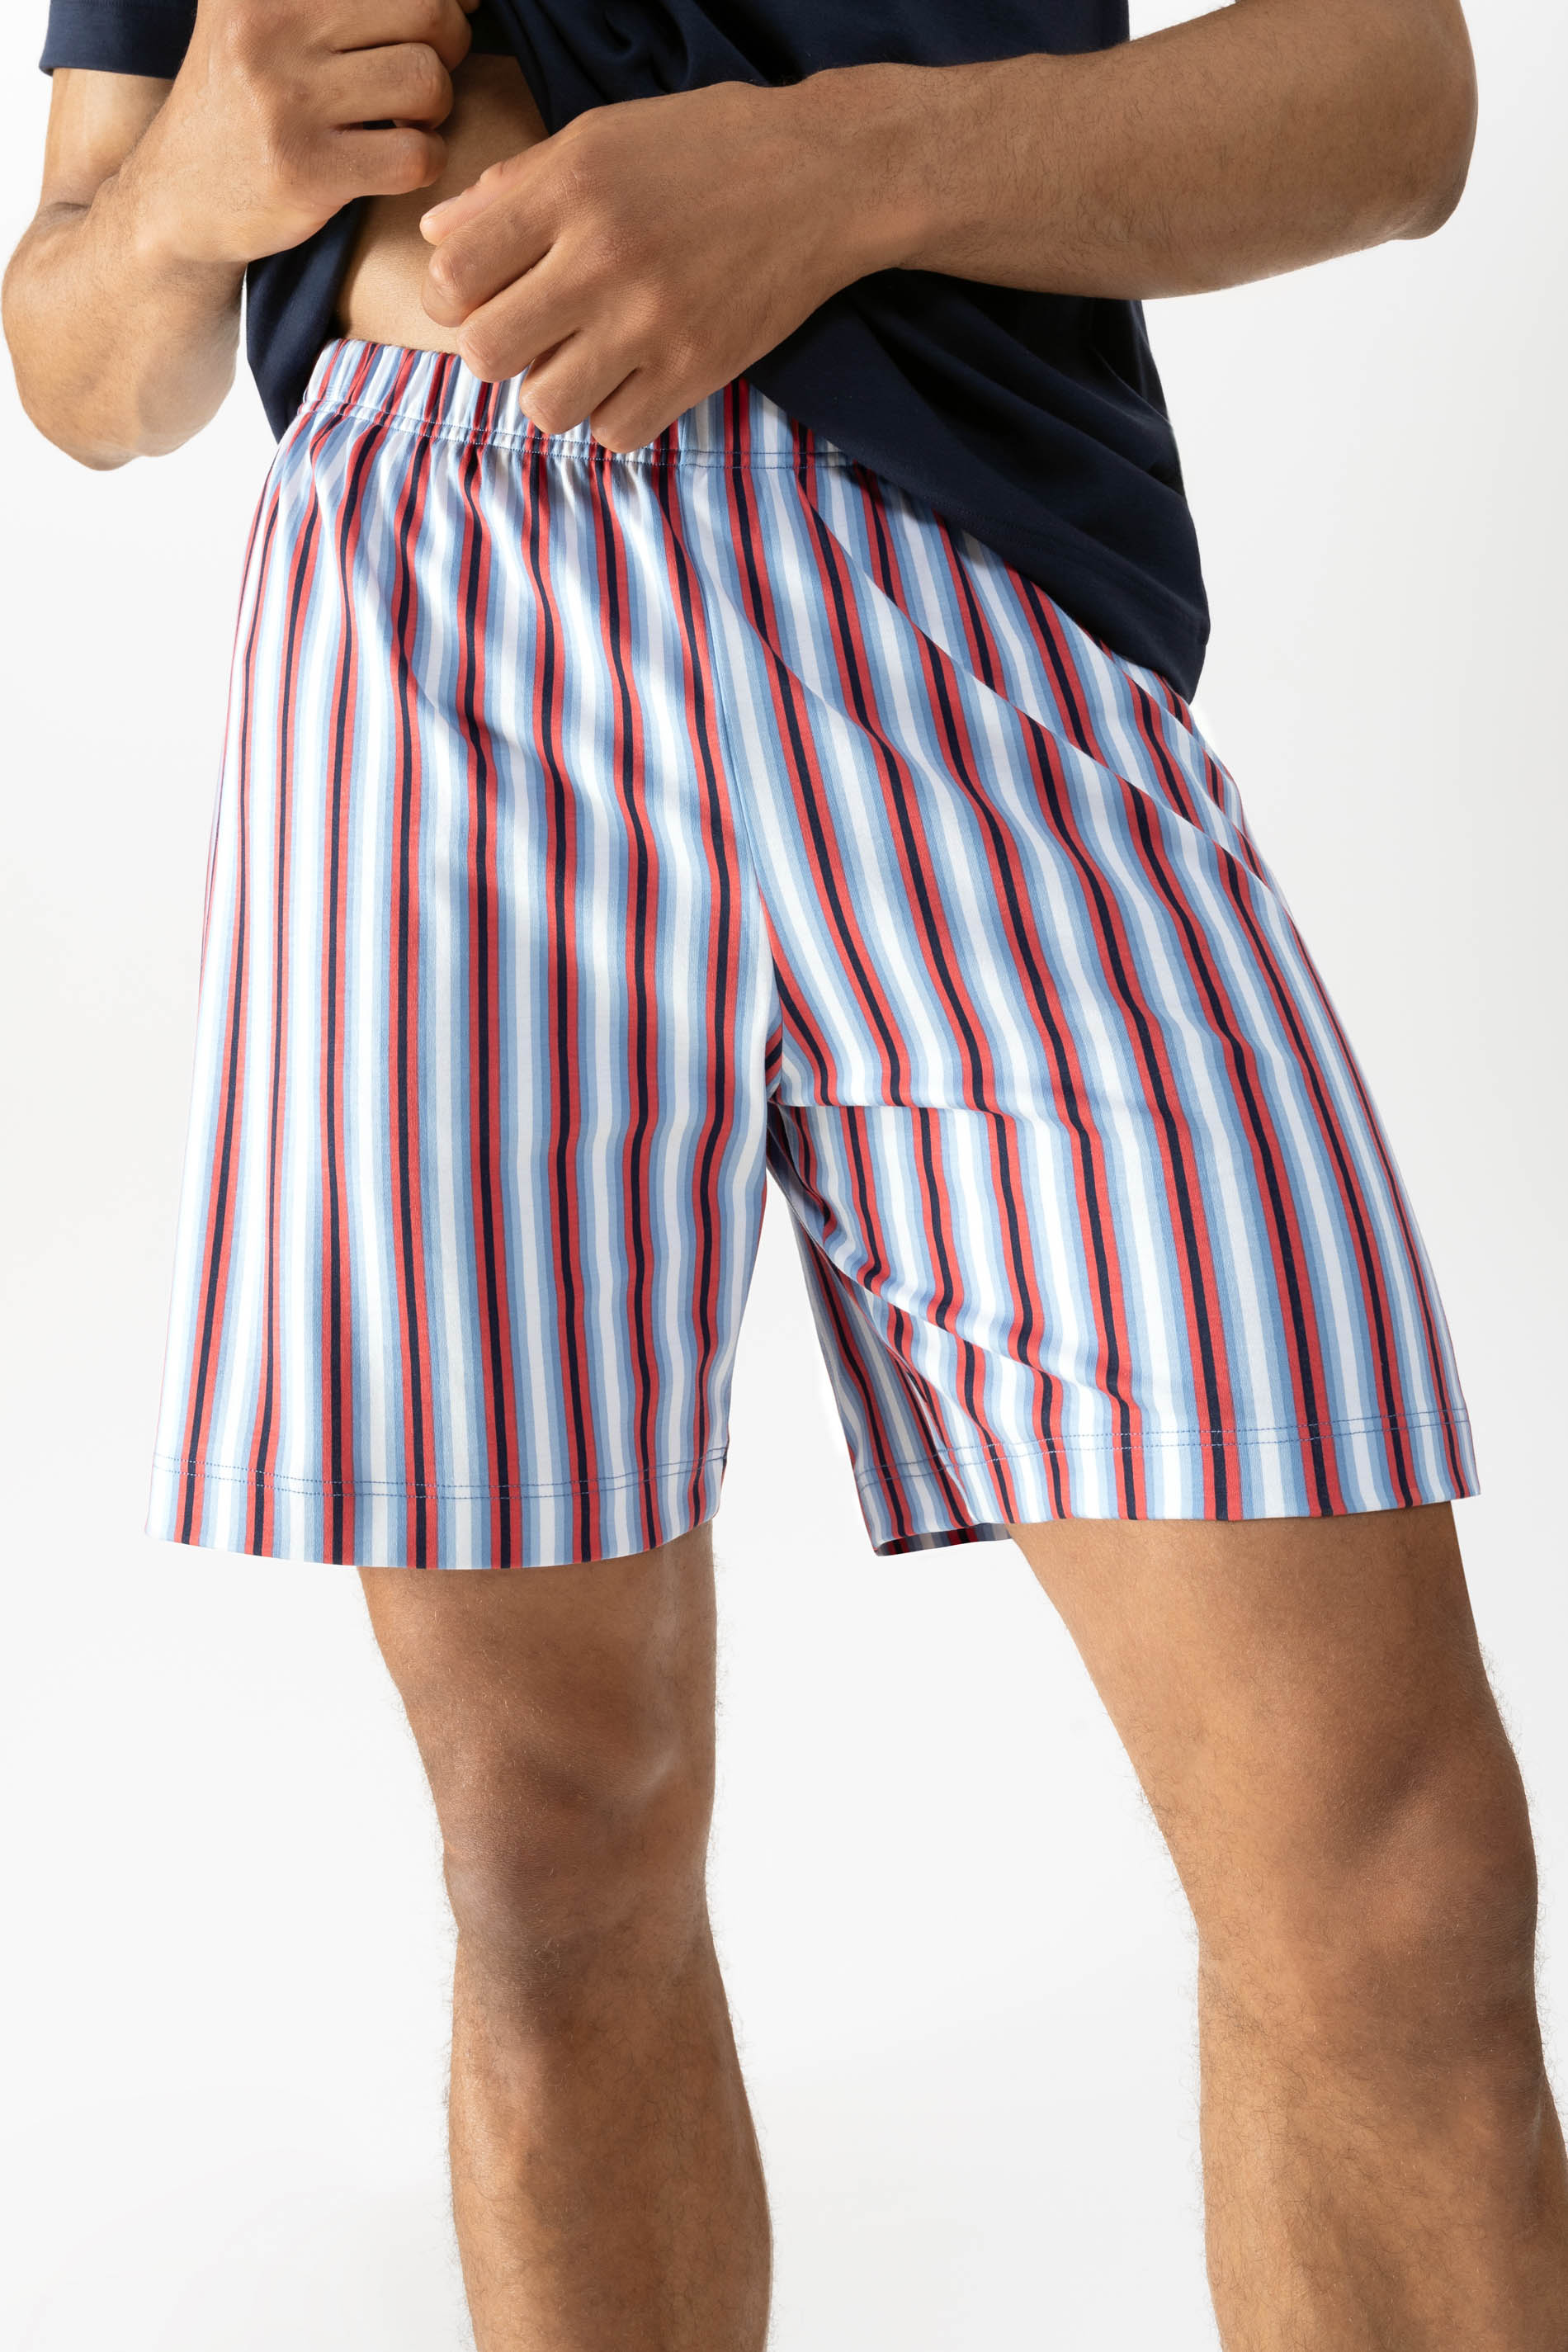 Pyjamas Serie Gradient Stripes Detail View 02 | mey®